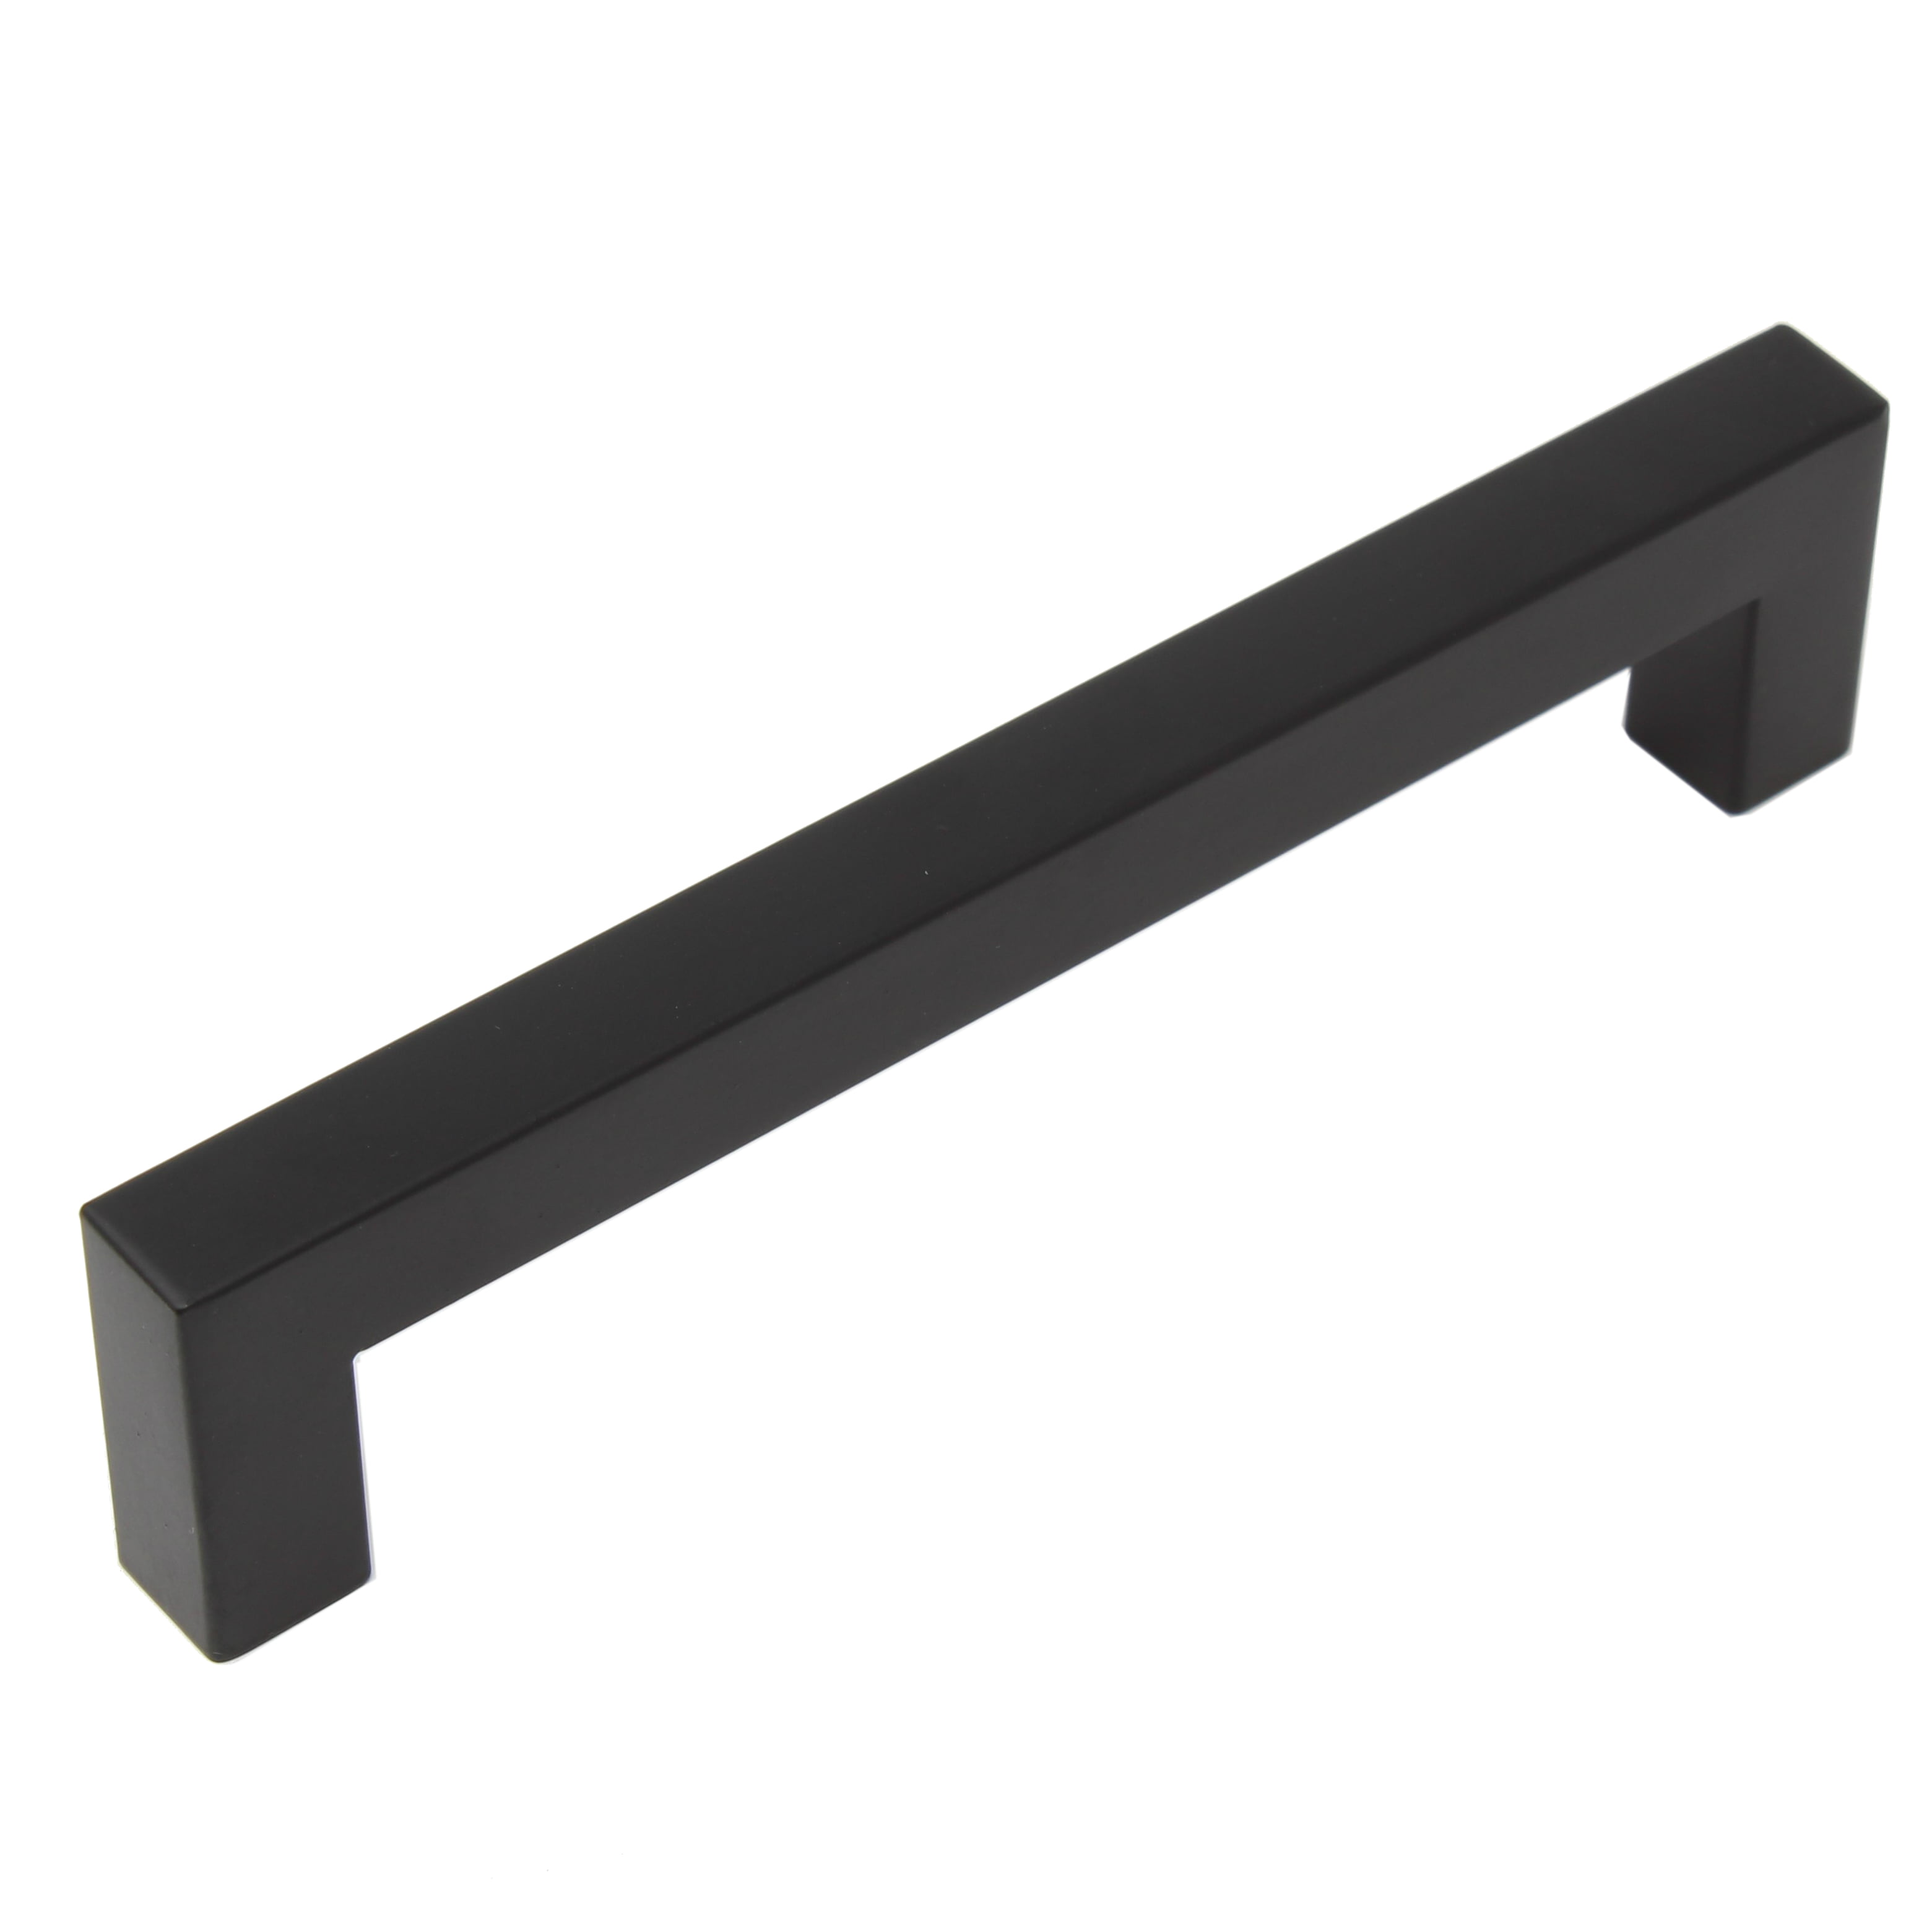 Flat Black Square Bar Cabinet Pulls: 5" Hole Center (128mm) | Modern Kitchen Cabinet Hardware Black Stainless Steel